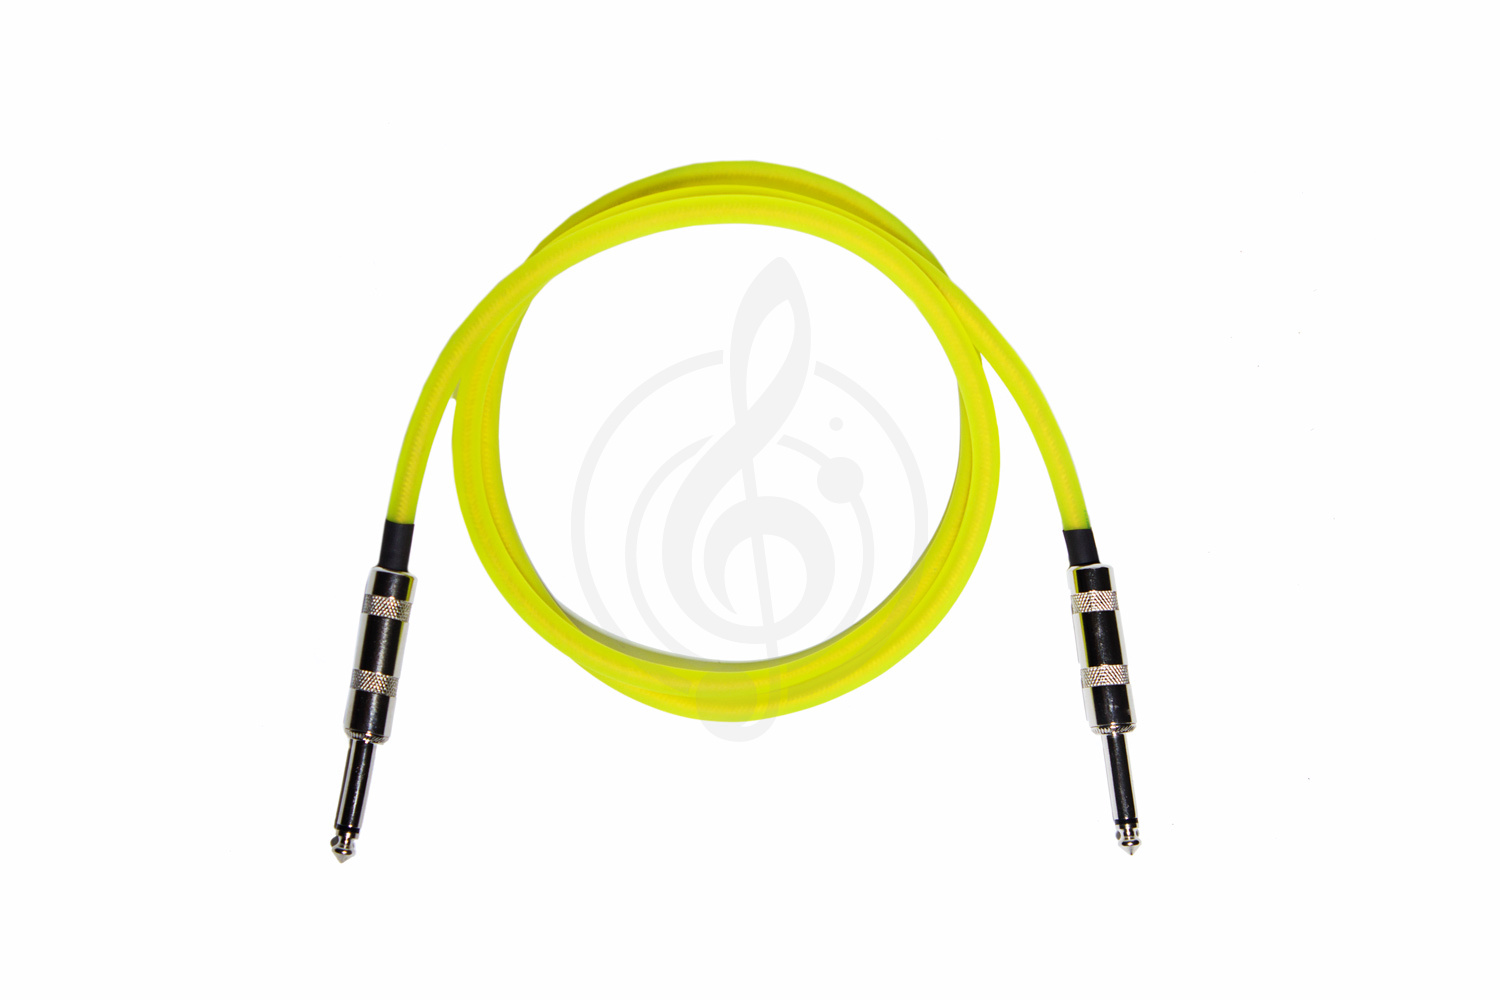  Jack-Jack инструментальный кабель Kirlin Kirlin IM-201-1 YEF Инструментальный кабель 1м IM-201-1 YEF - фото 1